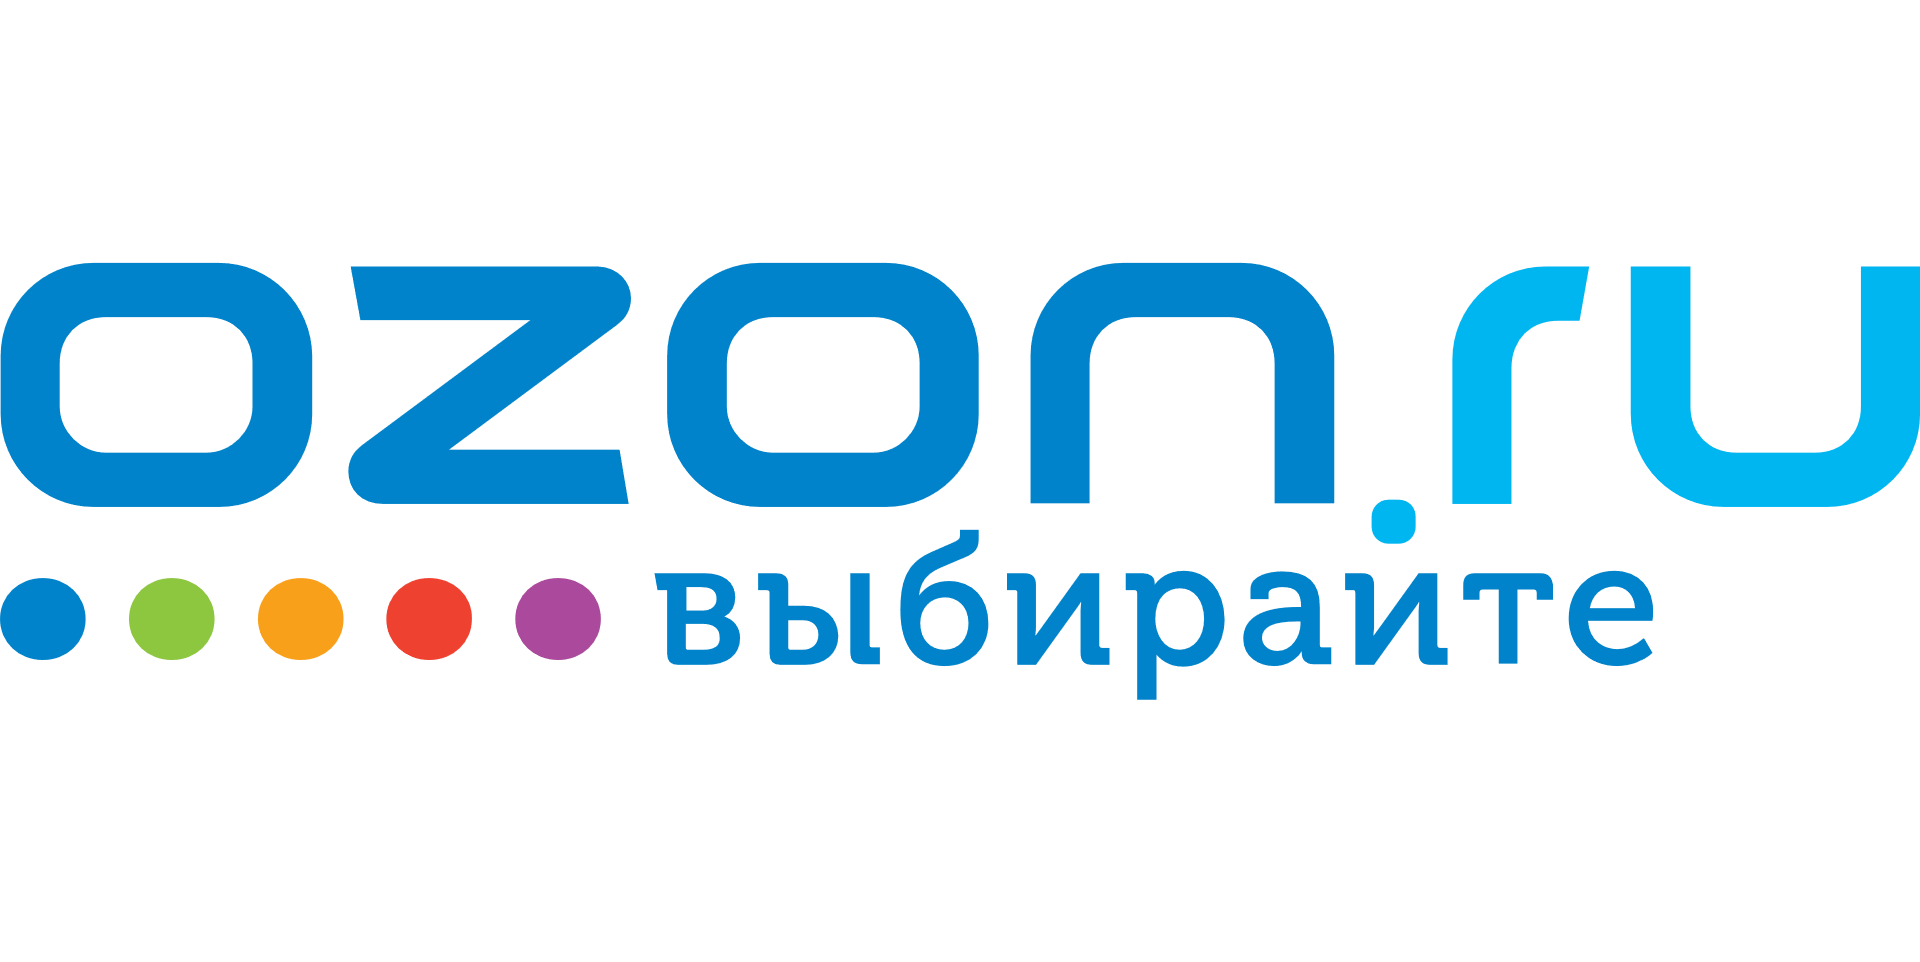 Озон арк. Ozone логотип. Озон интернет-магазин логотип. Озон логотип 2021. Озон новый логотип.